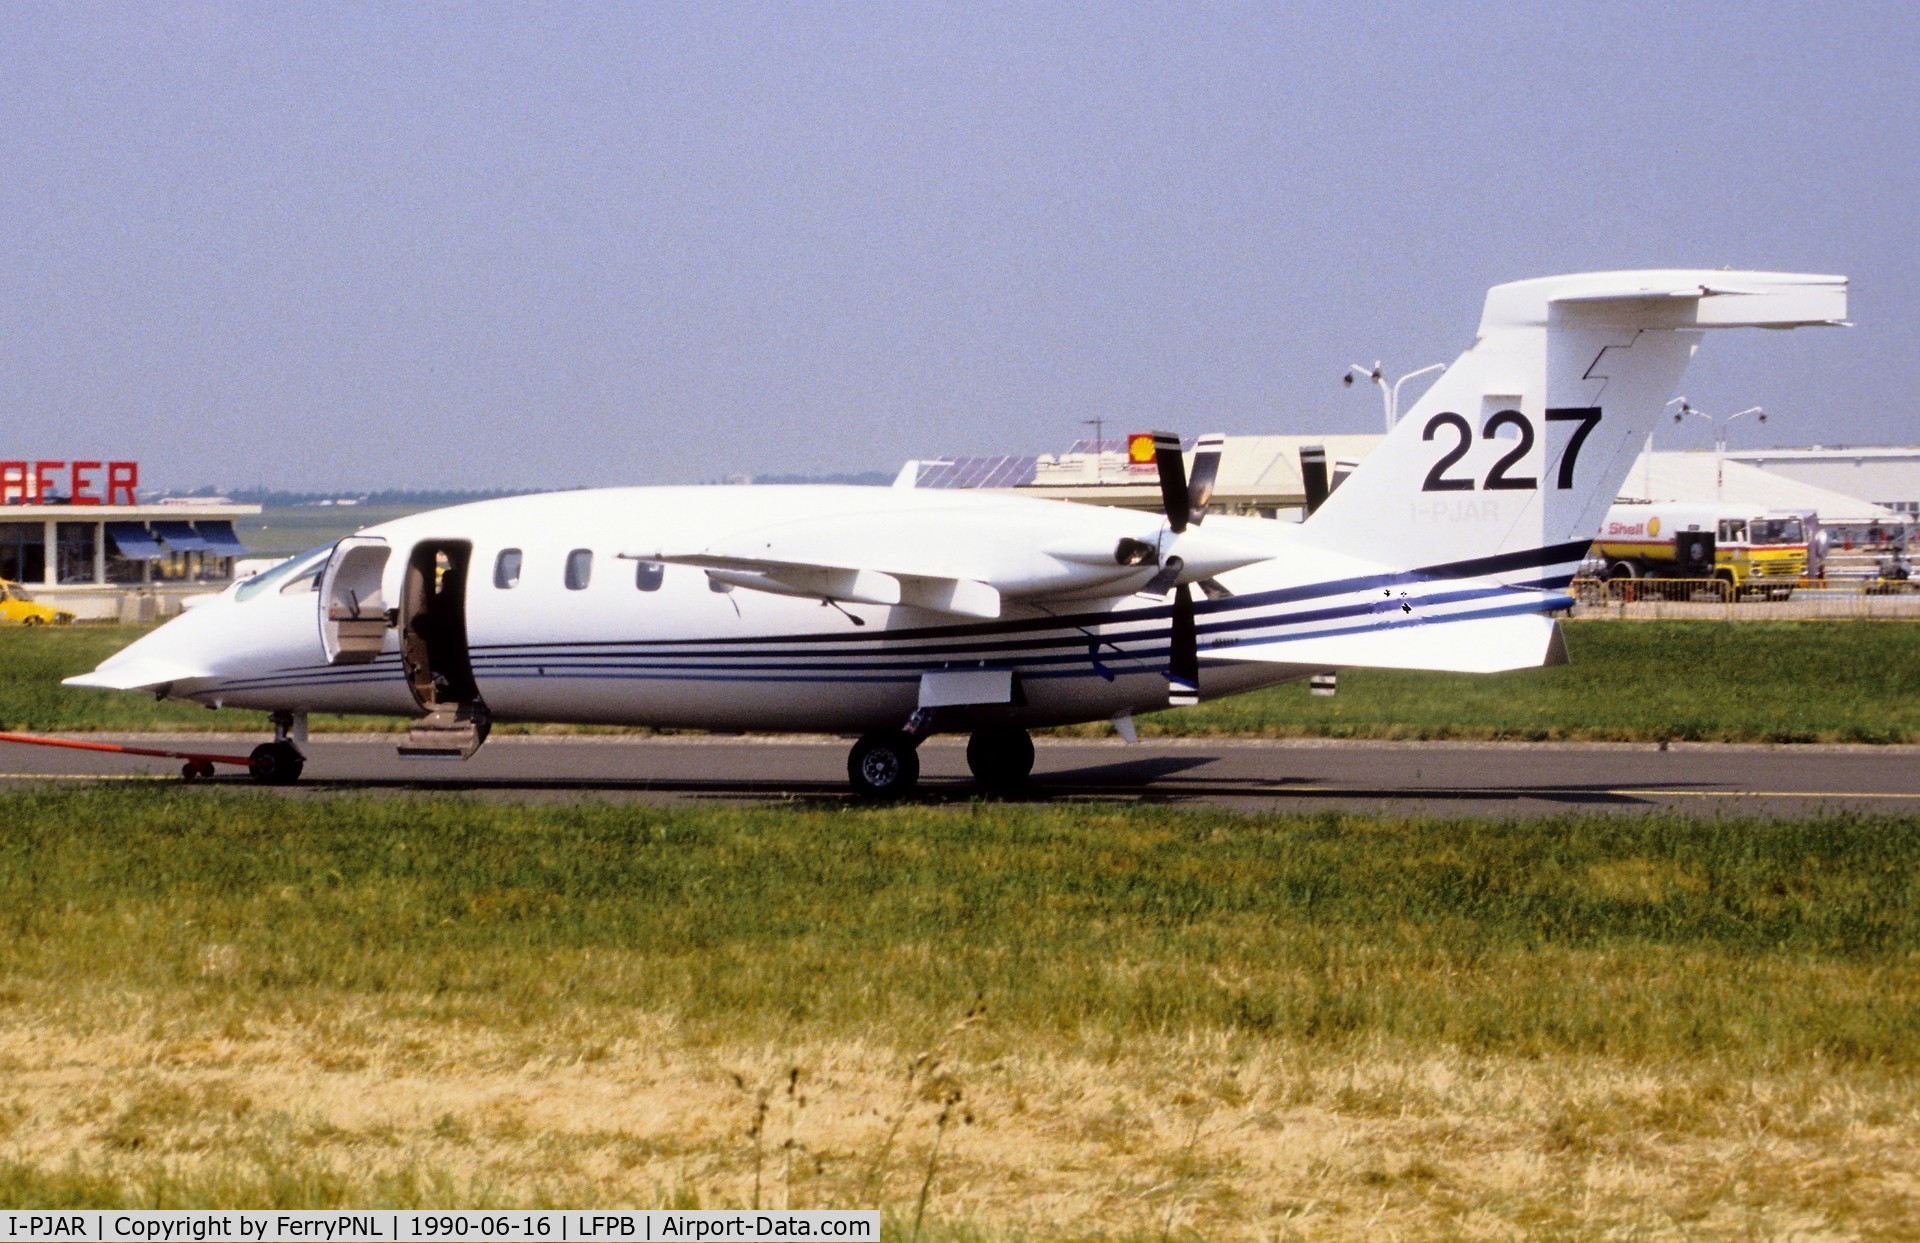 I-PJAR, 1987 Piaggio P-180 Avanti II C/N 1002, Piaggio P-180 under tow